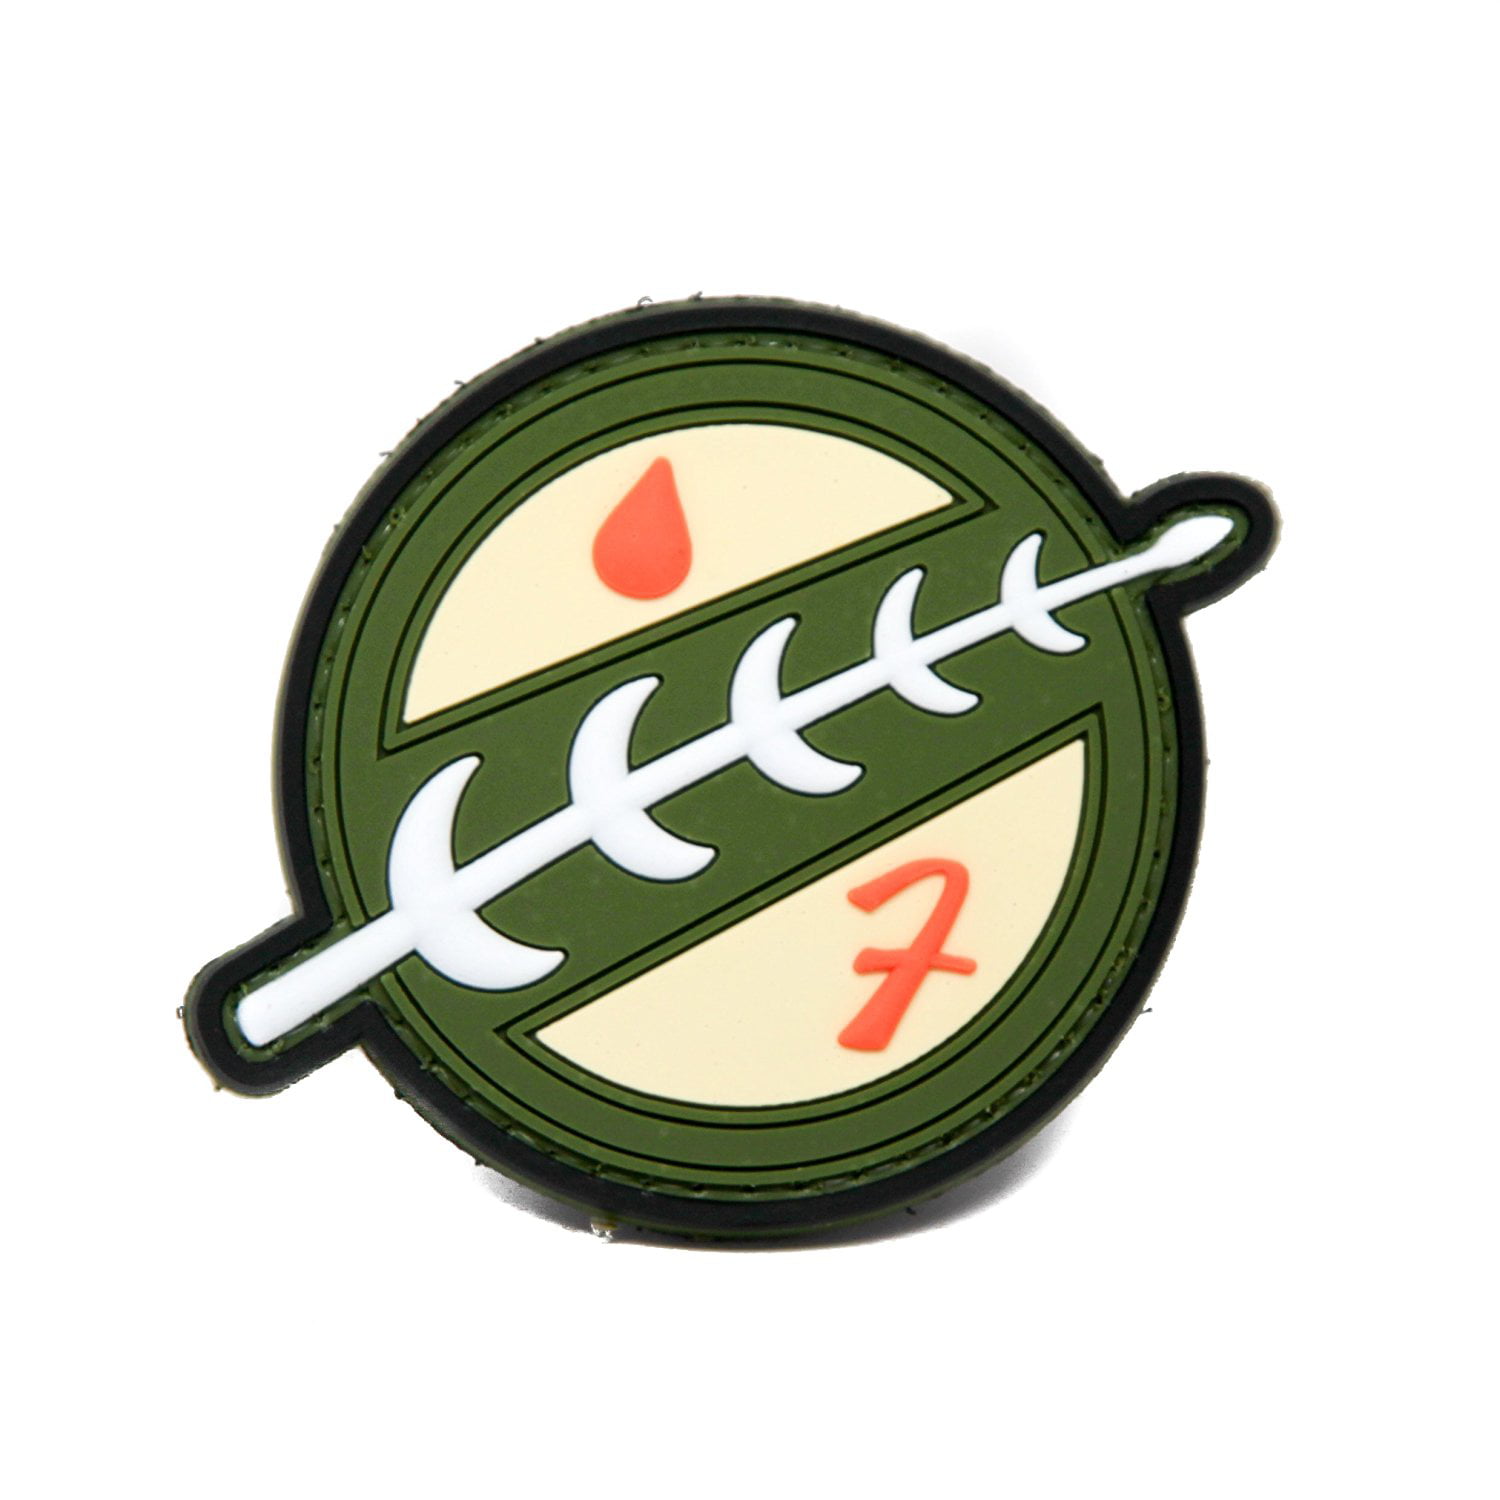 Star Wars Boba Fett Family Crest Patch 4 inch patch w/ hook & loop 